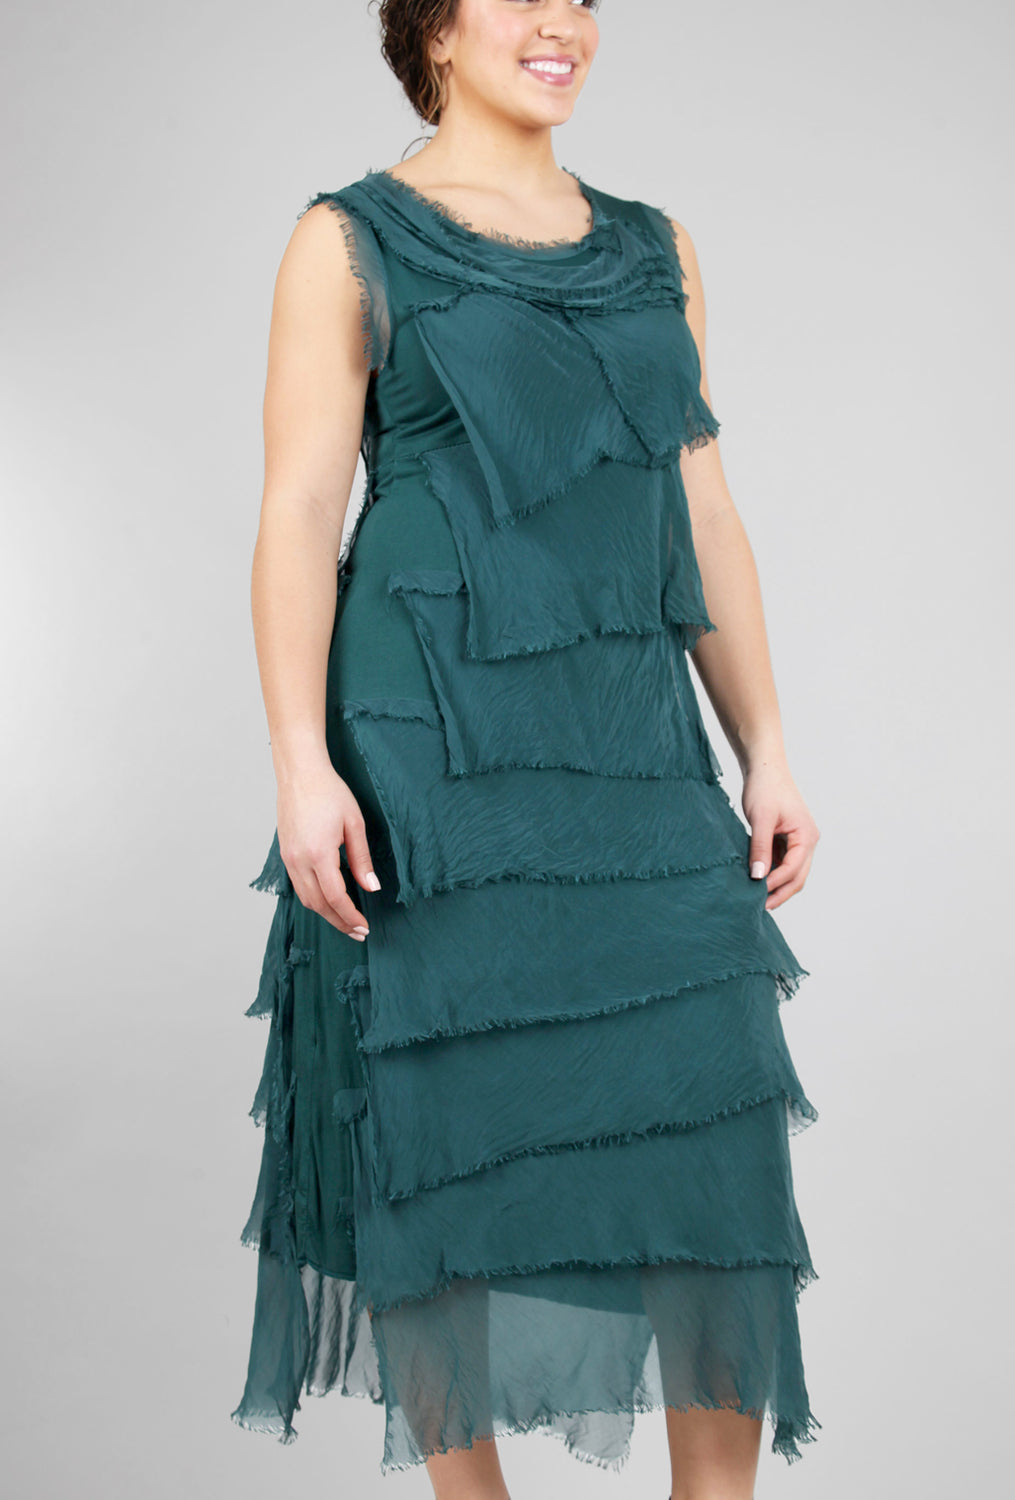 Long Tattered-Tiers Dress, Emerald